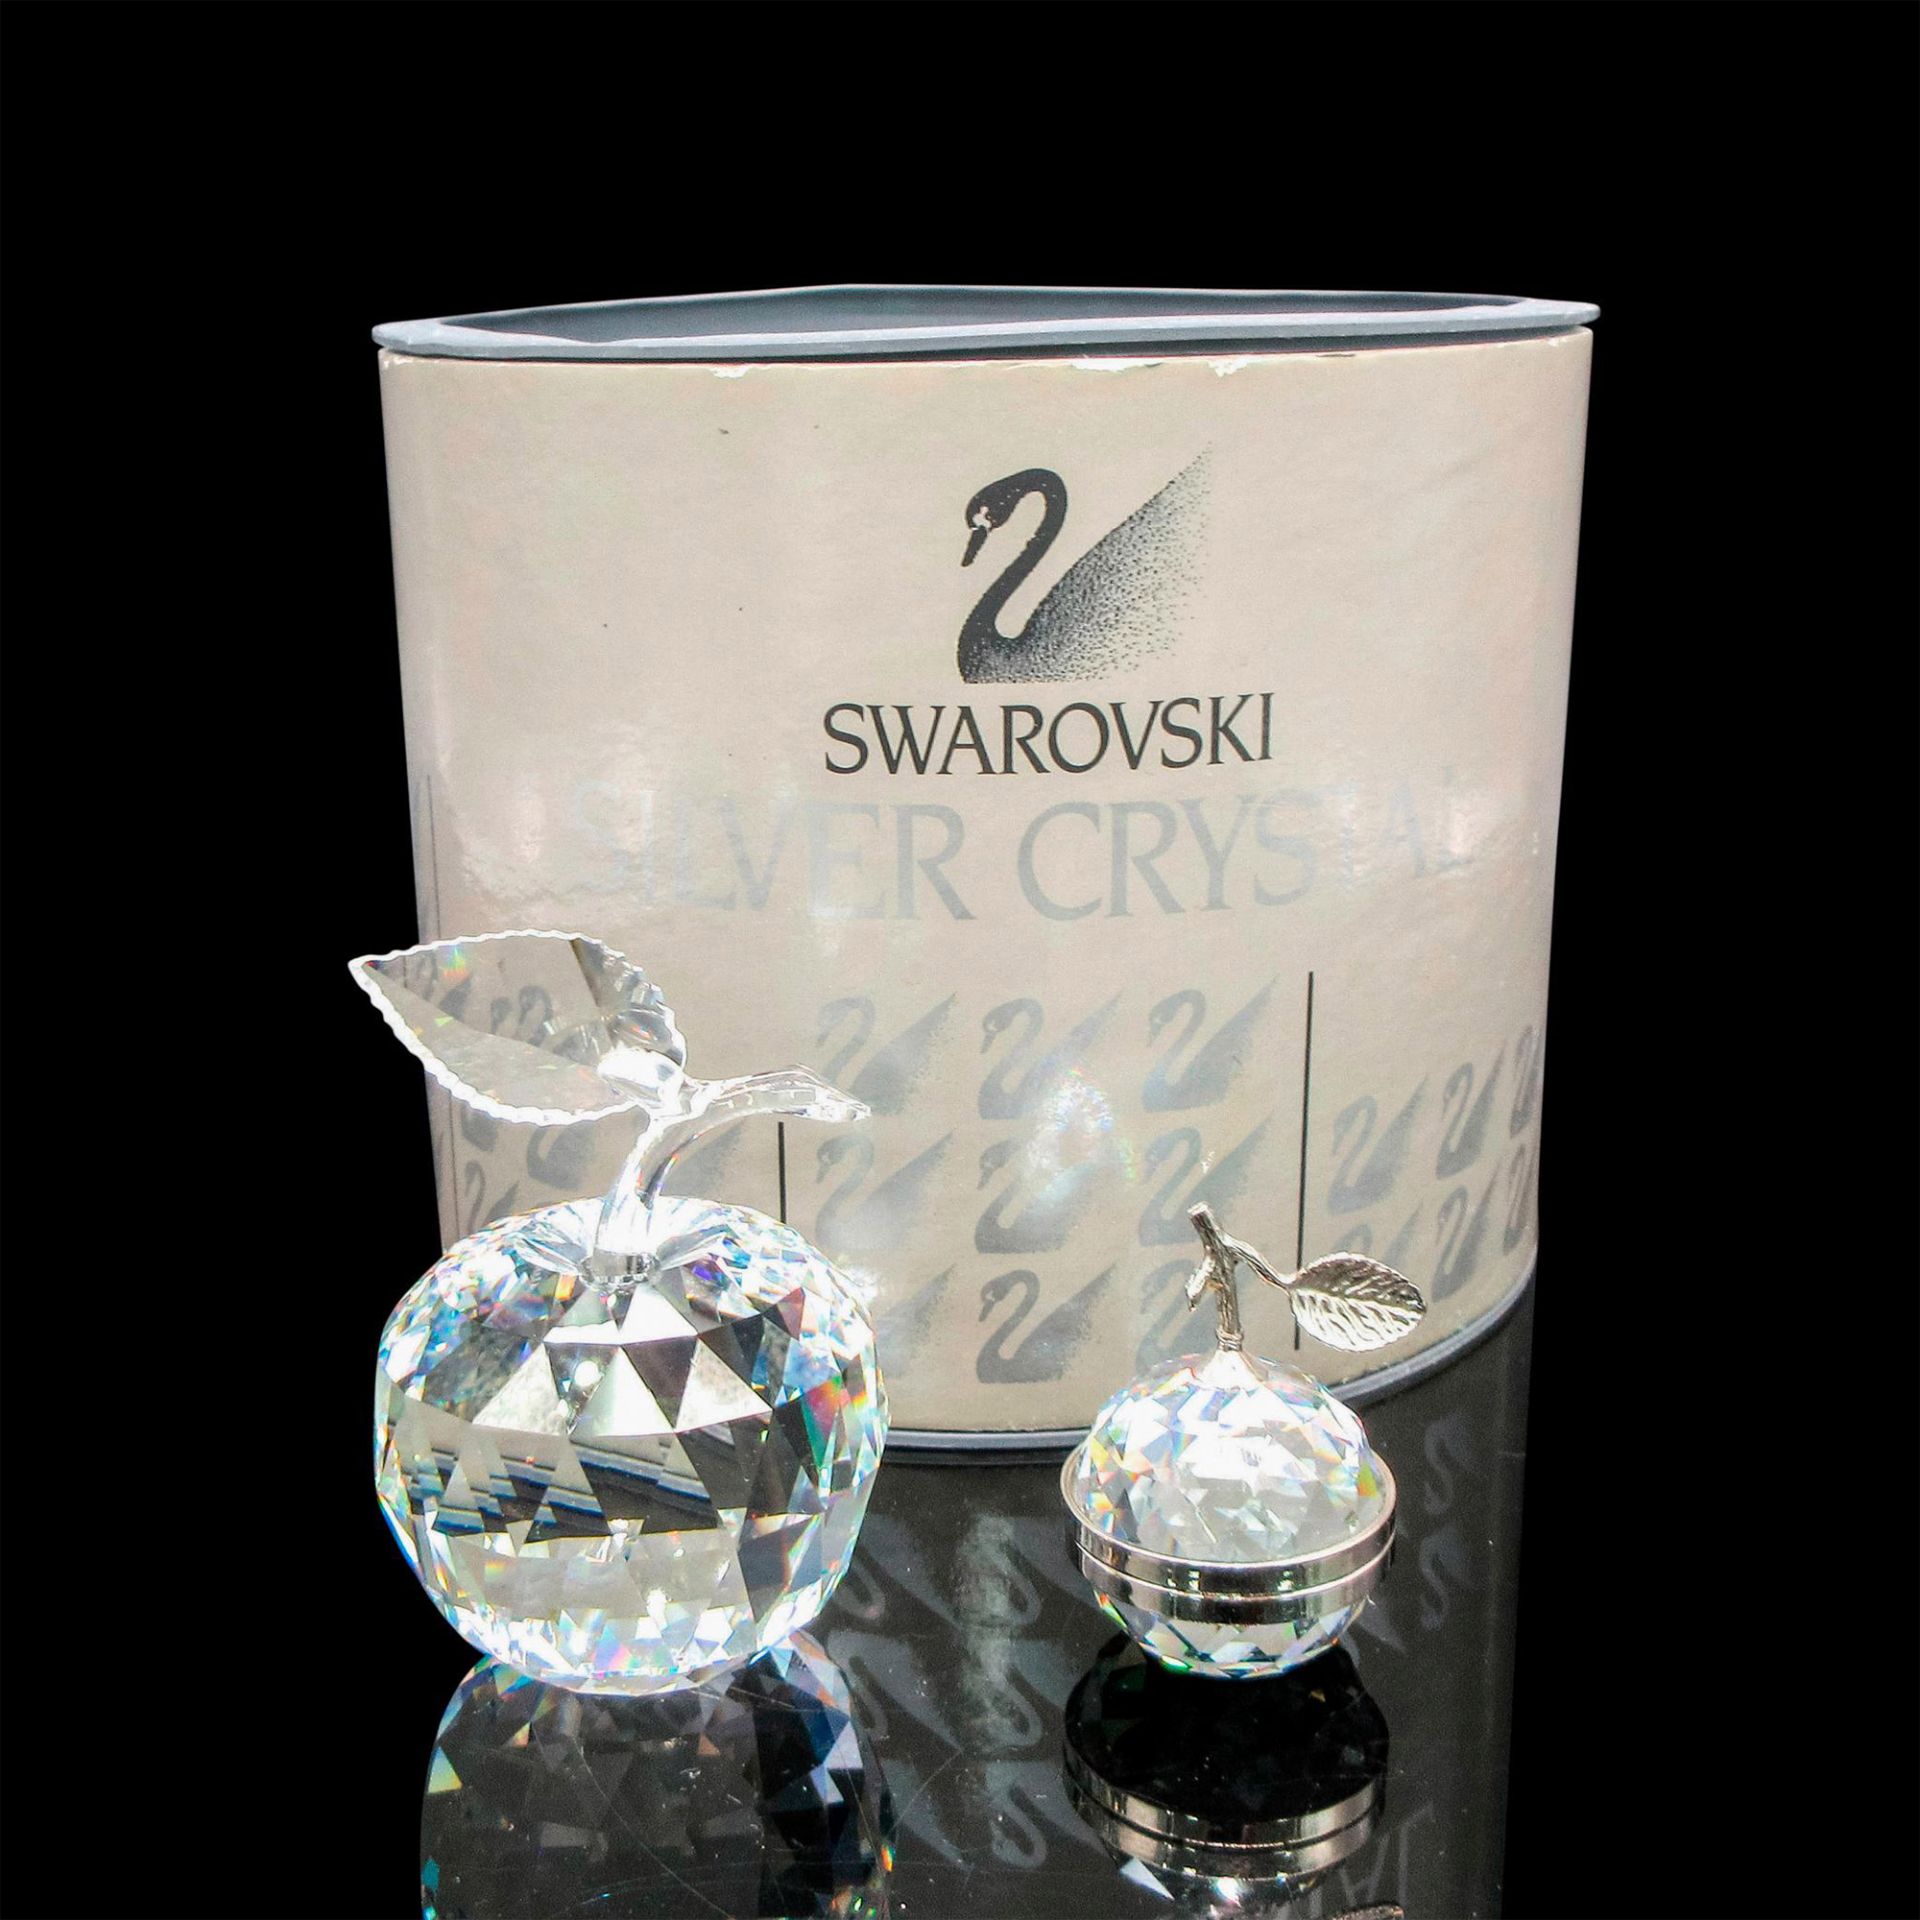 Swarovski Silver Crystal Apple Paperweight & Trinket Box - Image 3 of 3